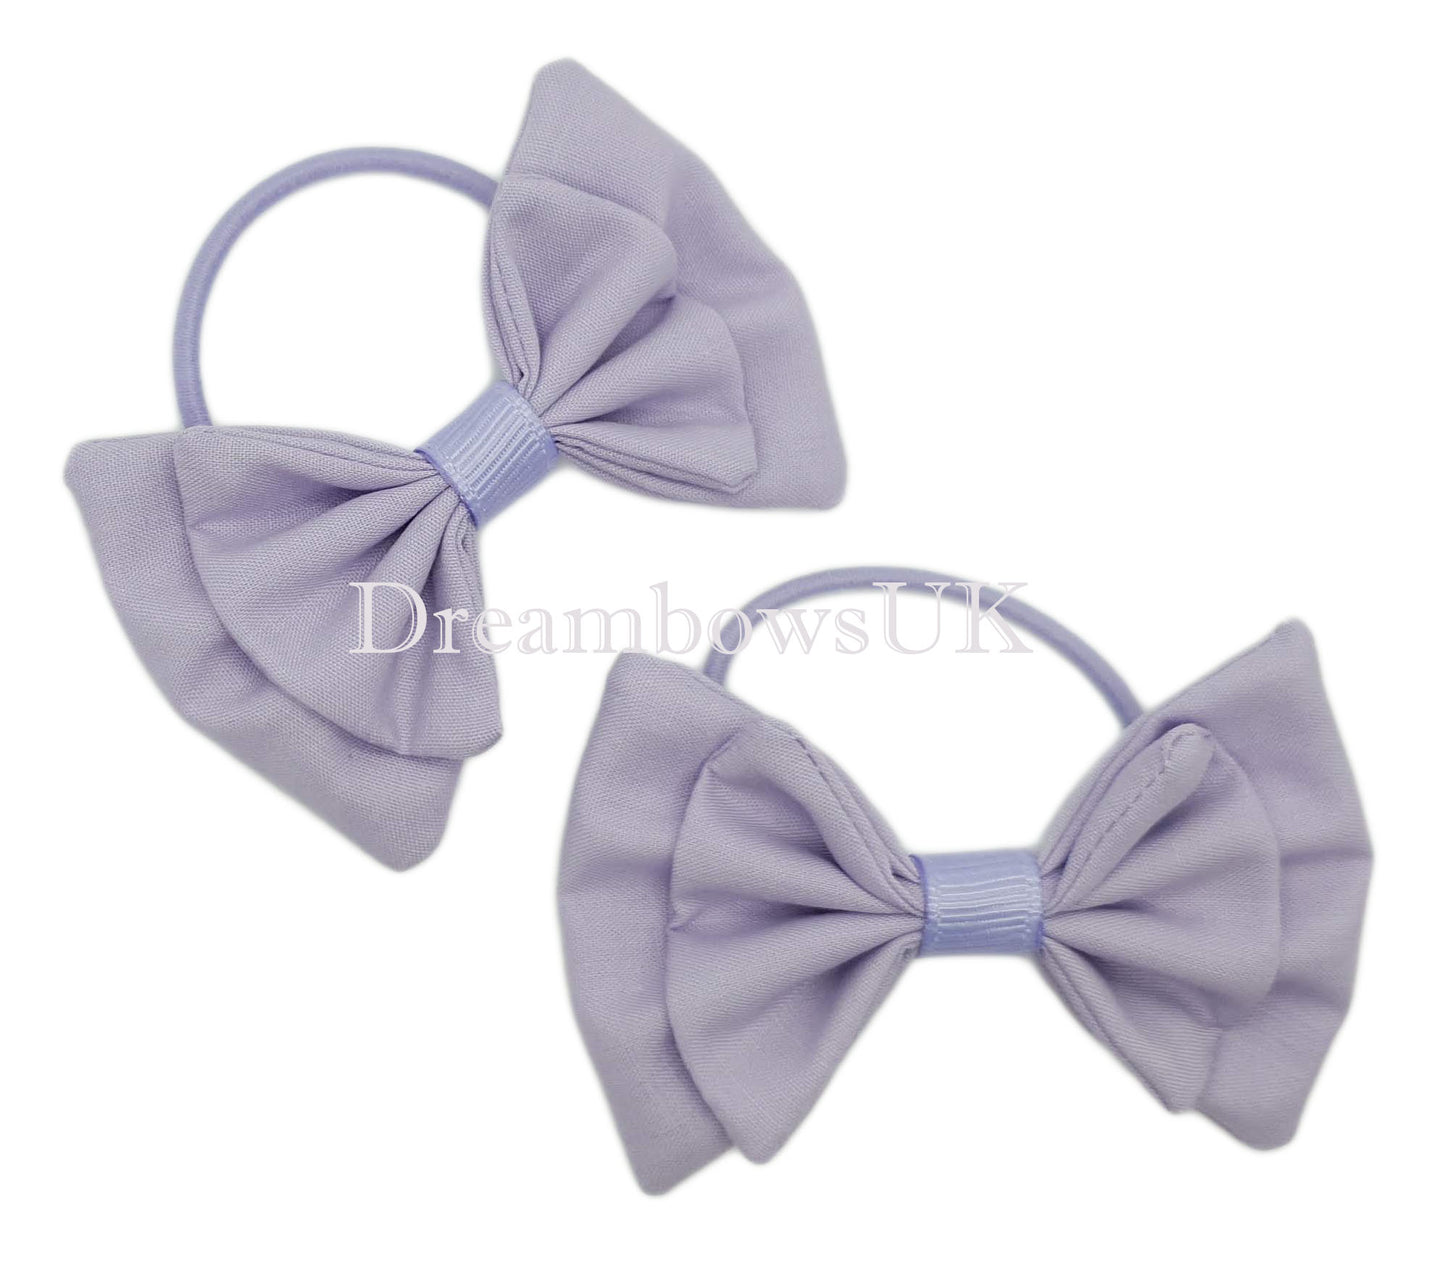 Girls lilac fabric hair bows on thin hair ties